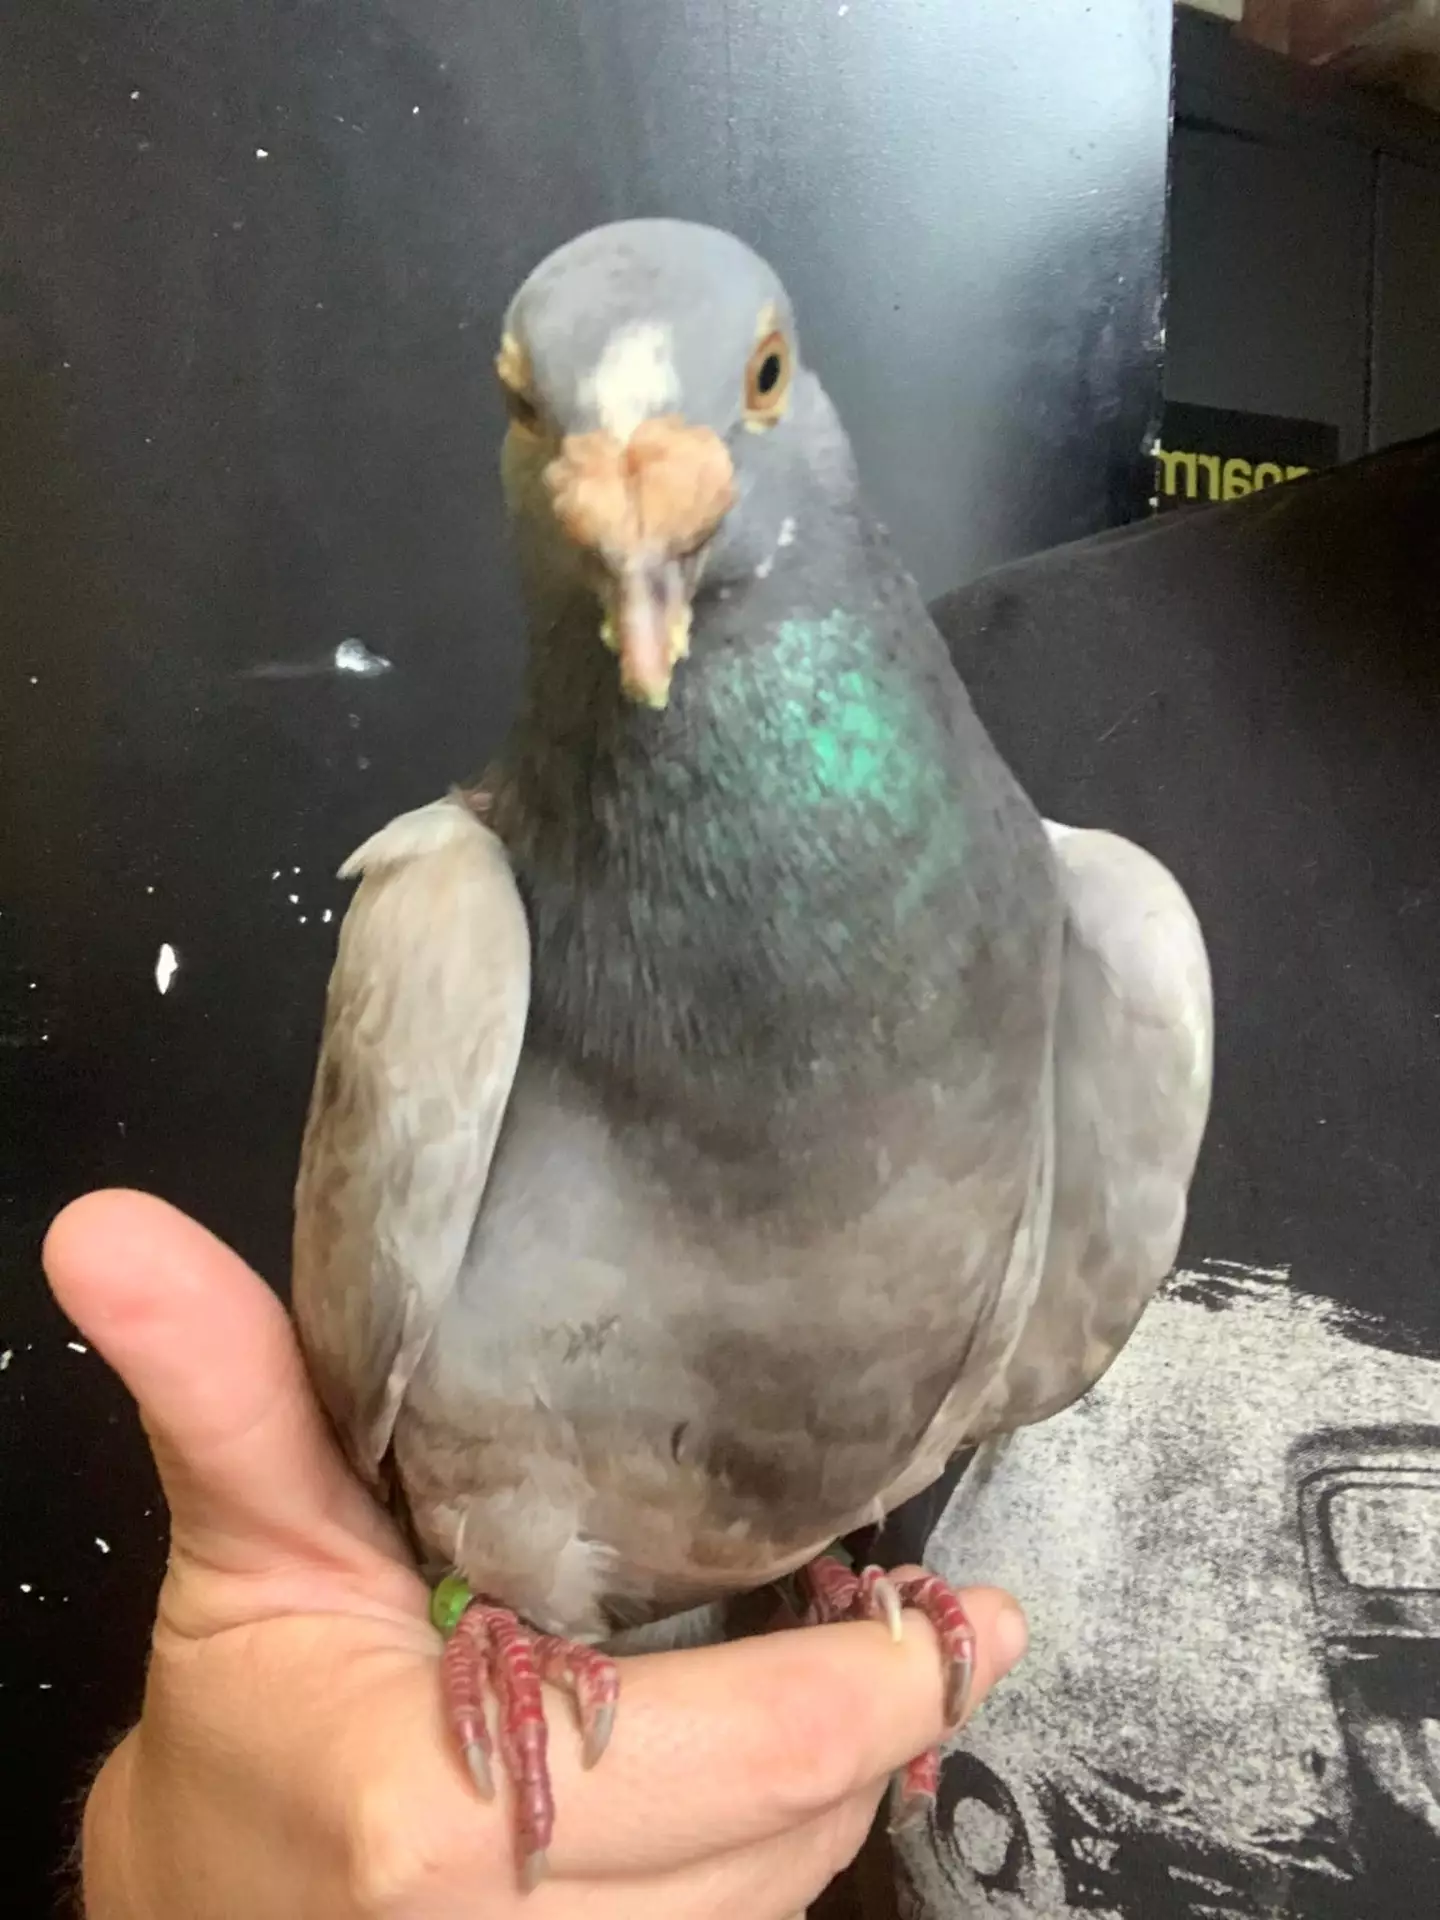 Here's Bob the pigeon.